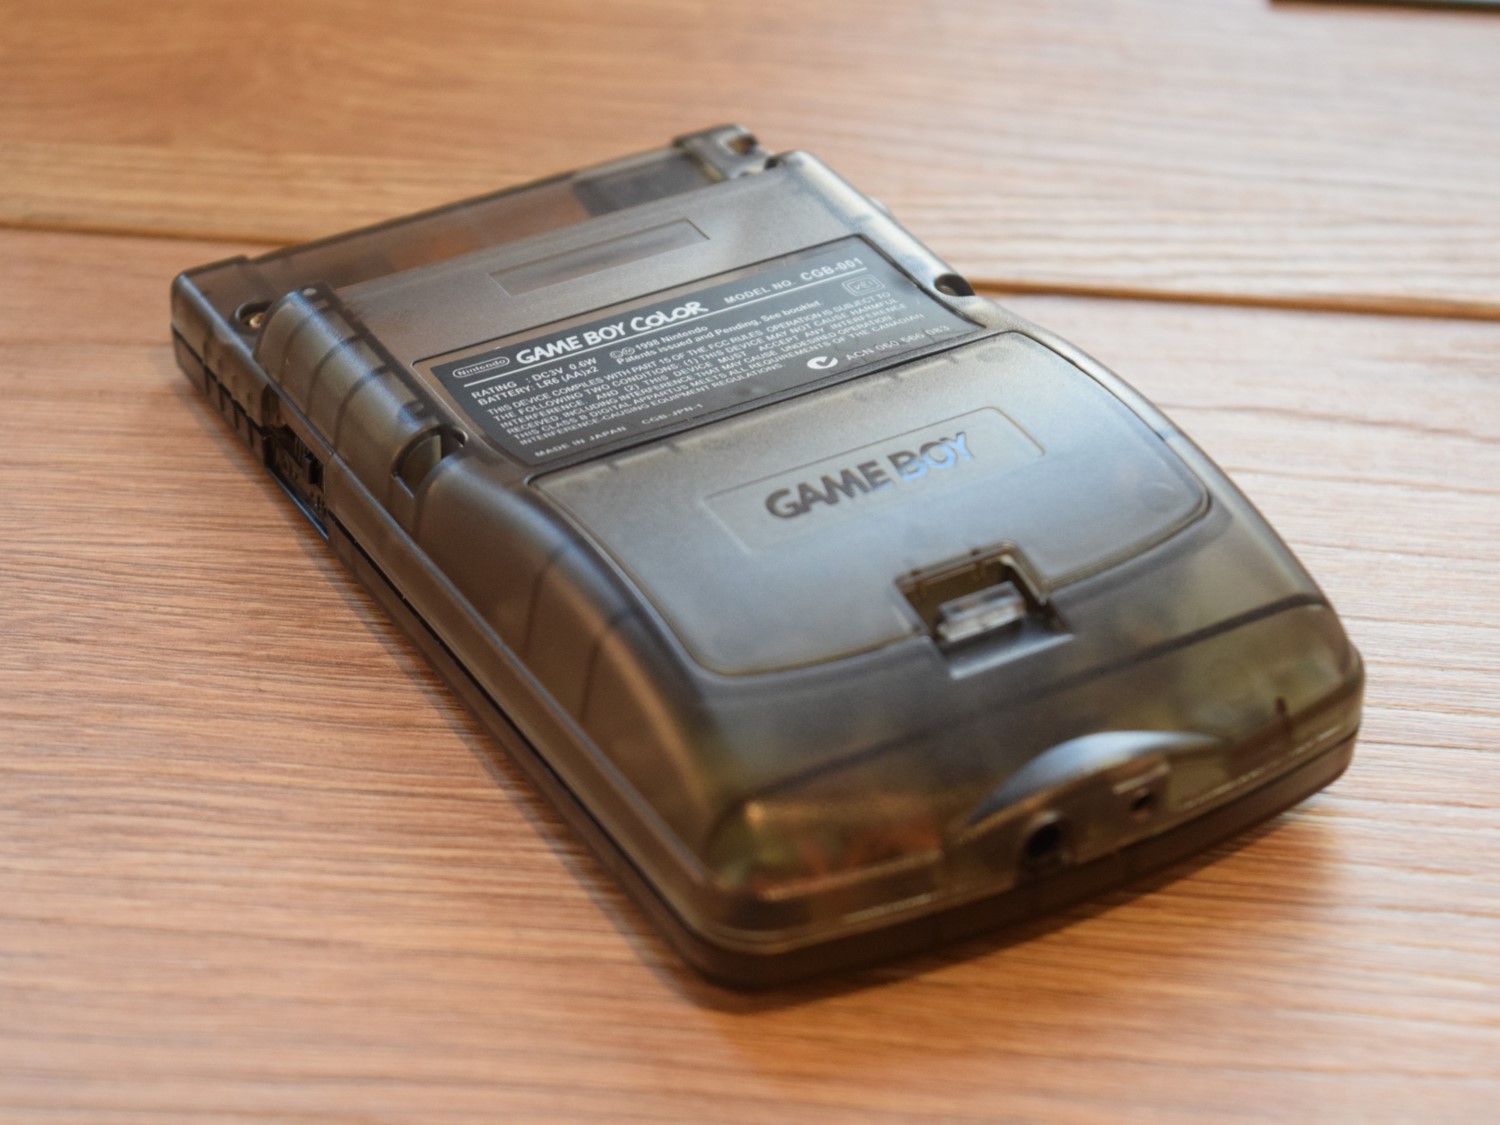 Gameboy Color IPS Blackberry Edition - Gameboy Color Hardware - 4